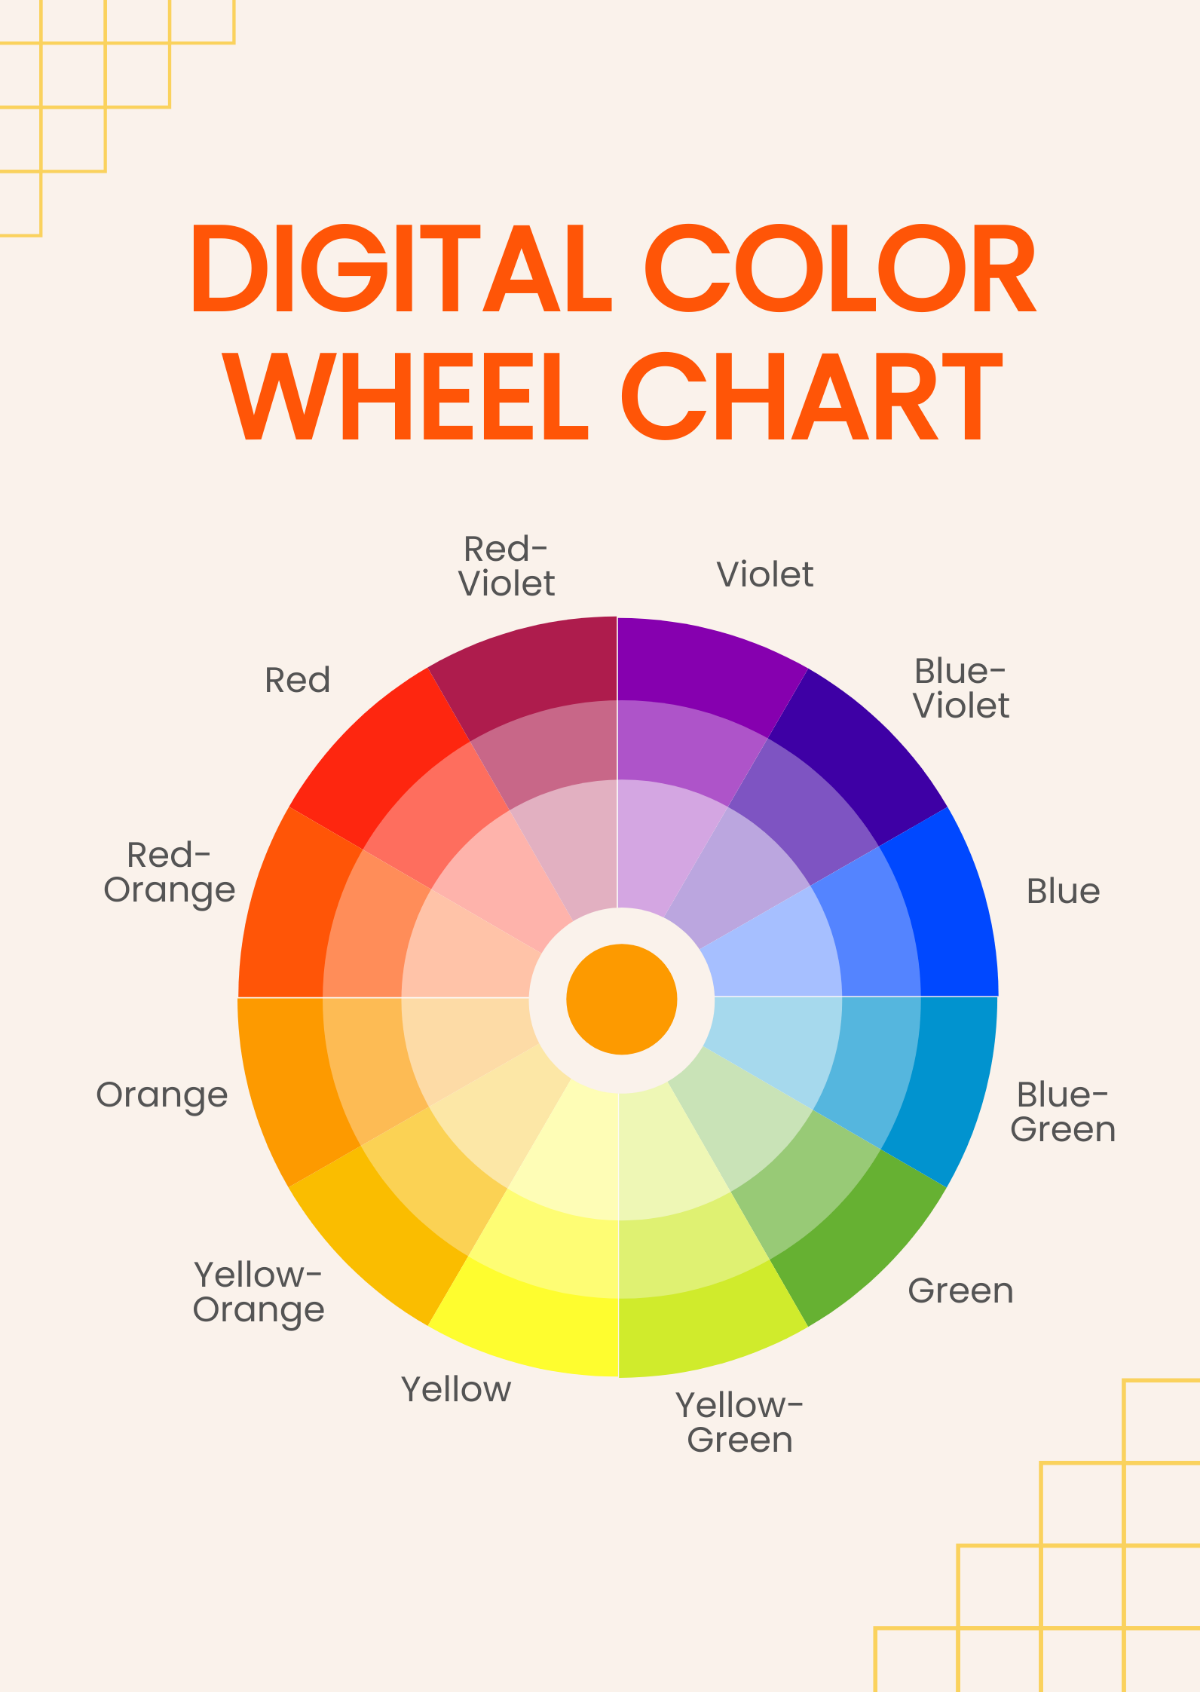 Digital Color Wheel Chart Template